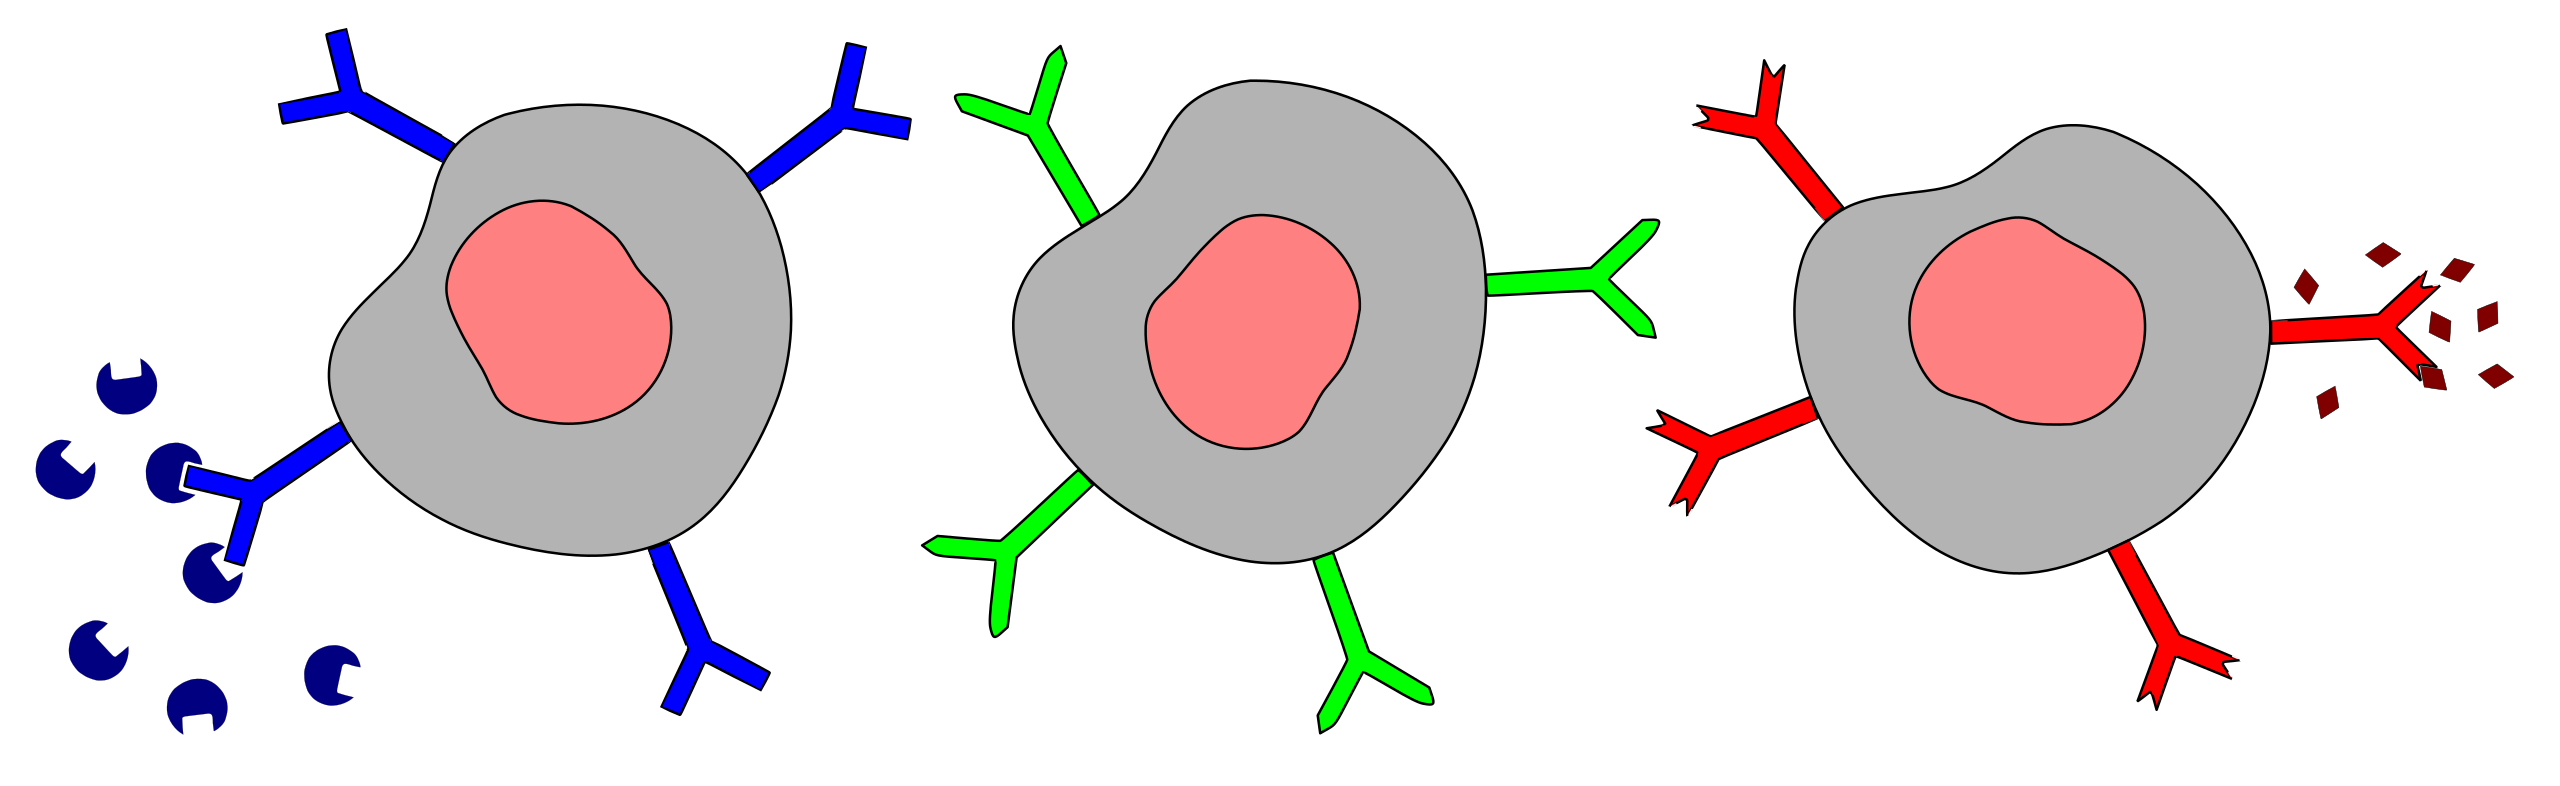 Иммуноген. Антиген рисунок. Антиген антитело. Рецепторы клетки иллюстрация. Антитело строение без фона.